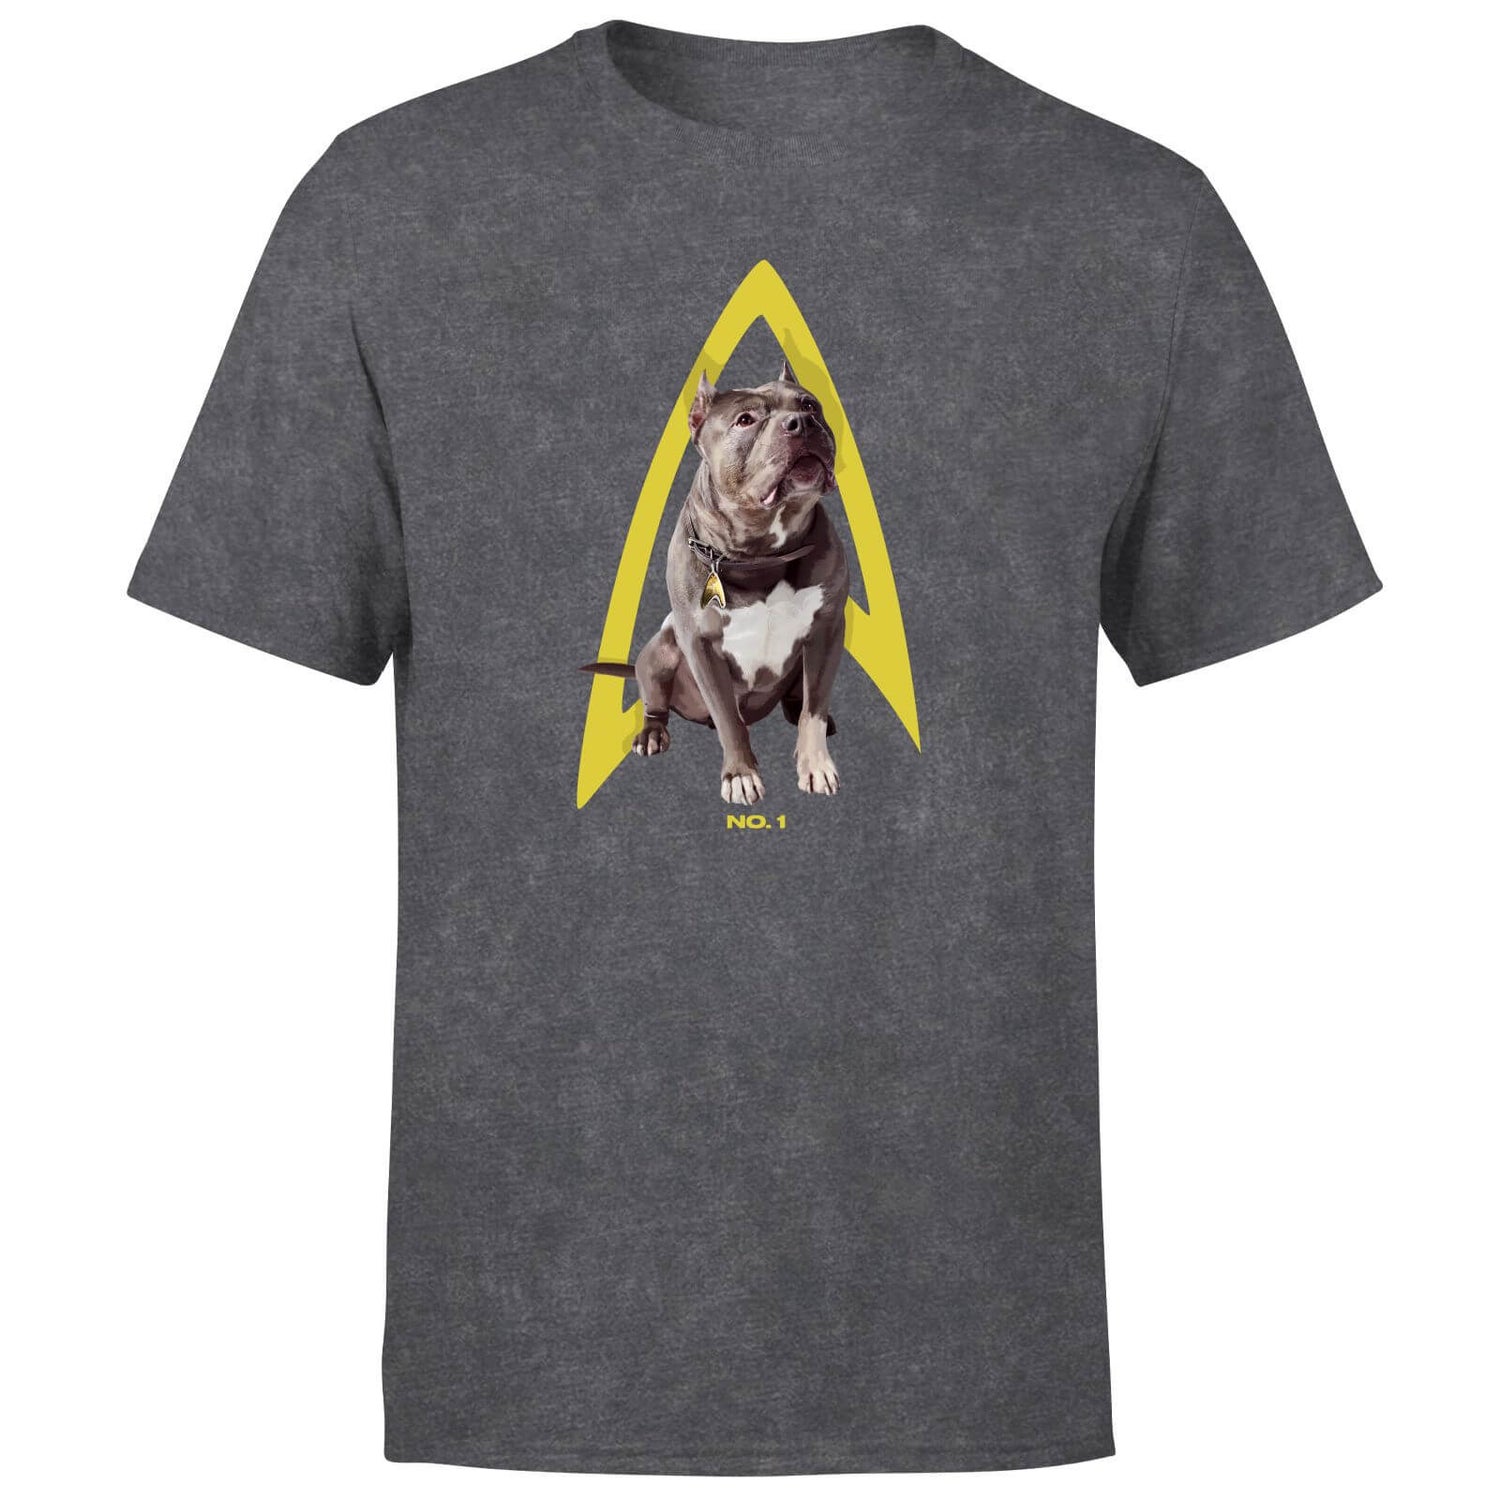 Camiseta unisex Star Trek: Picard Number One - Negro lavado ácido